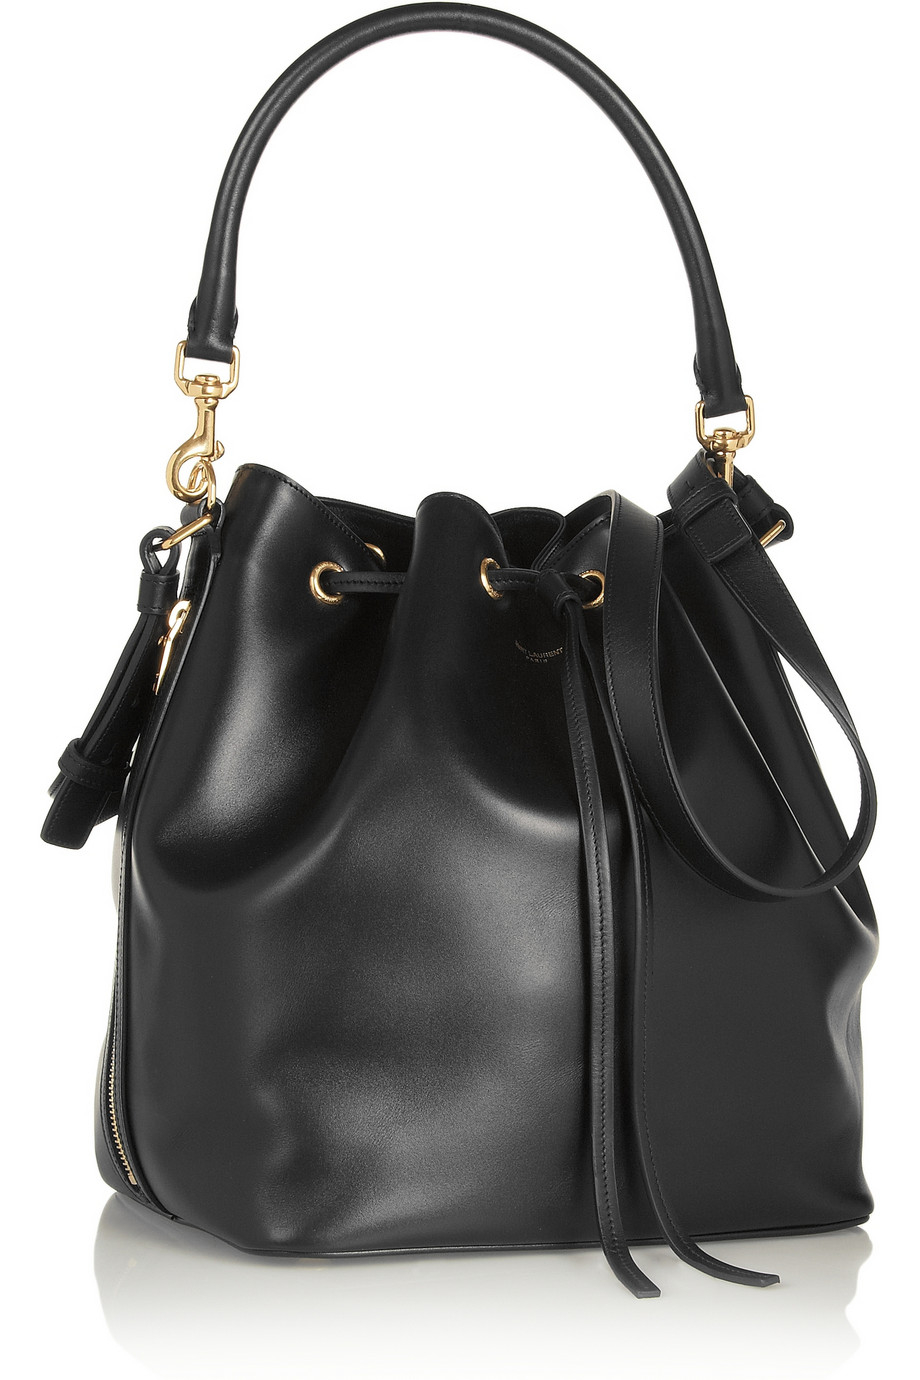 Saint Laurent Emmanuelle Medium Leather Bucket Bag in Black | Lyst